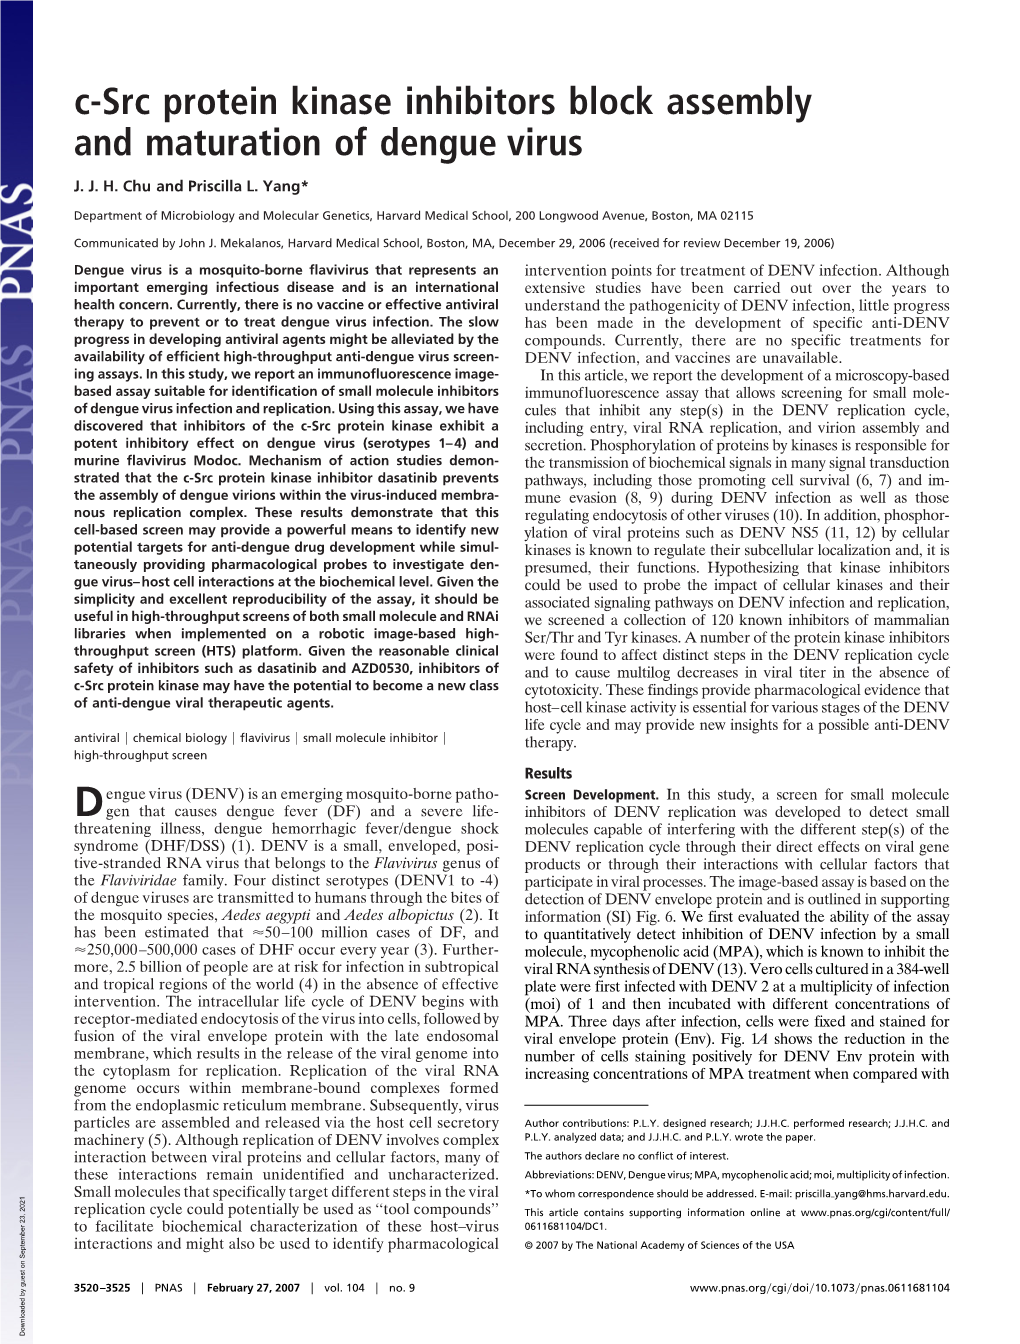 C-Src Protein Kinase Inhibitors Block Assembly and Maturation of Dengue Virus